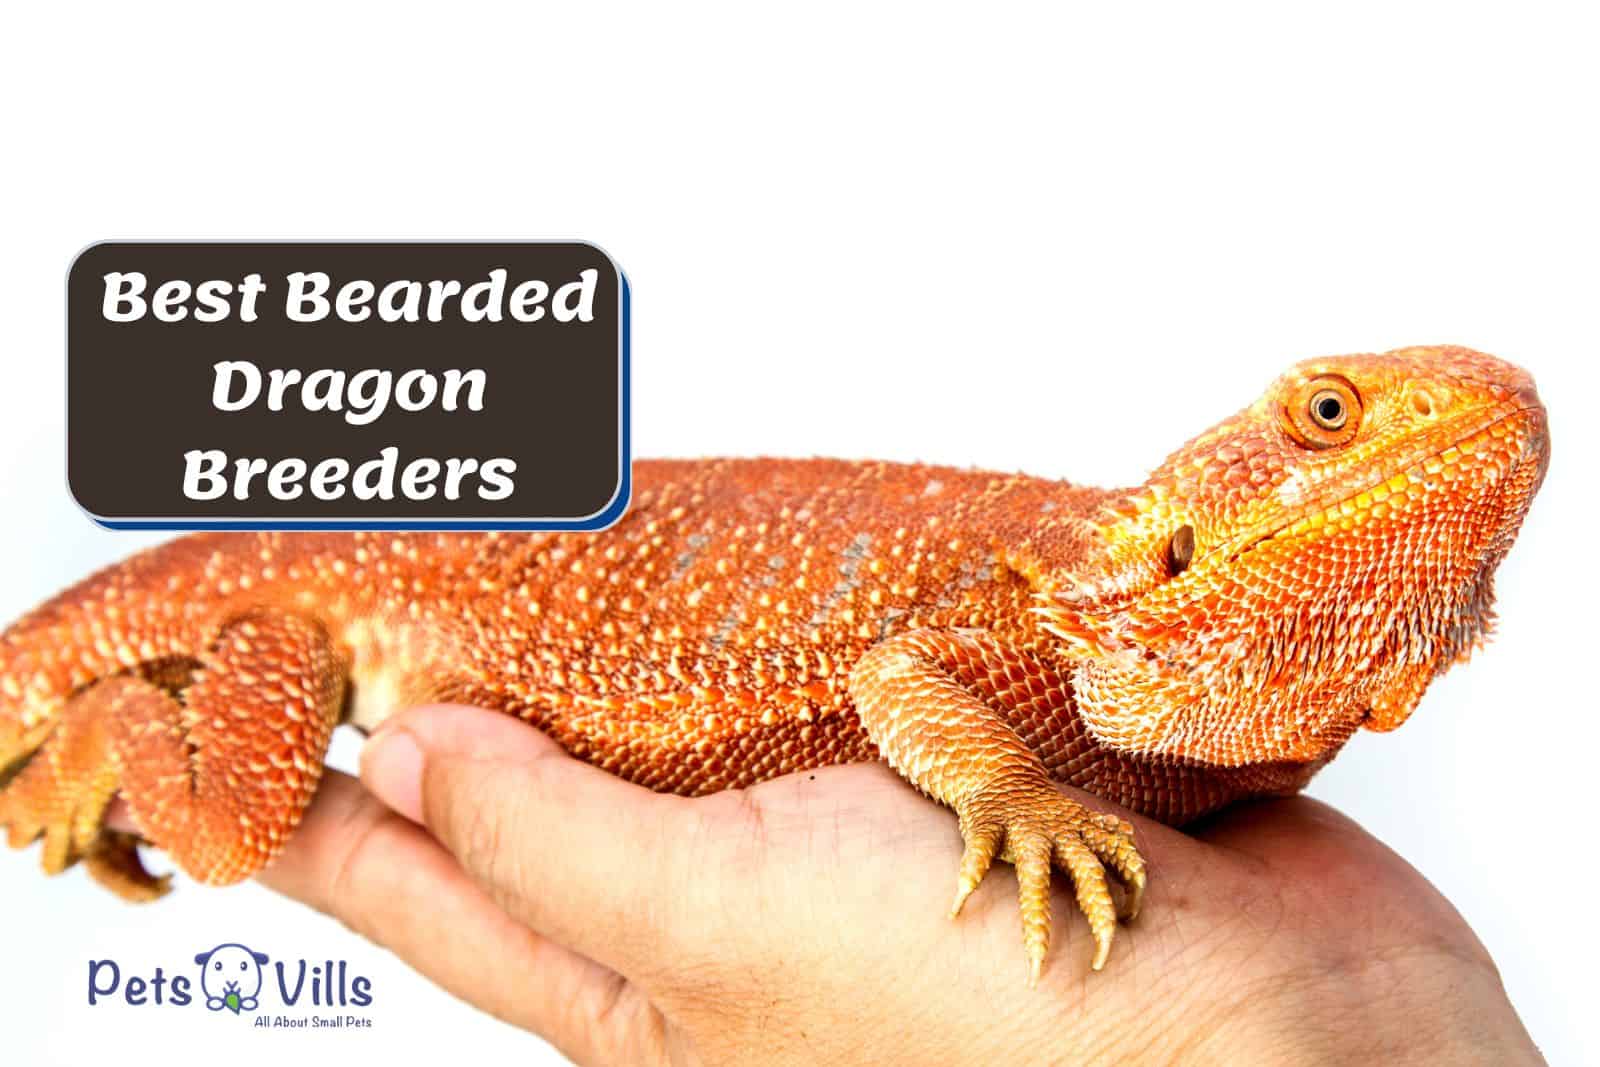 breeder holding an orange bearded dragon beside best bearded dragon breeder